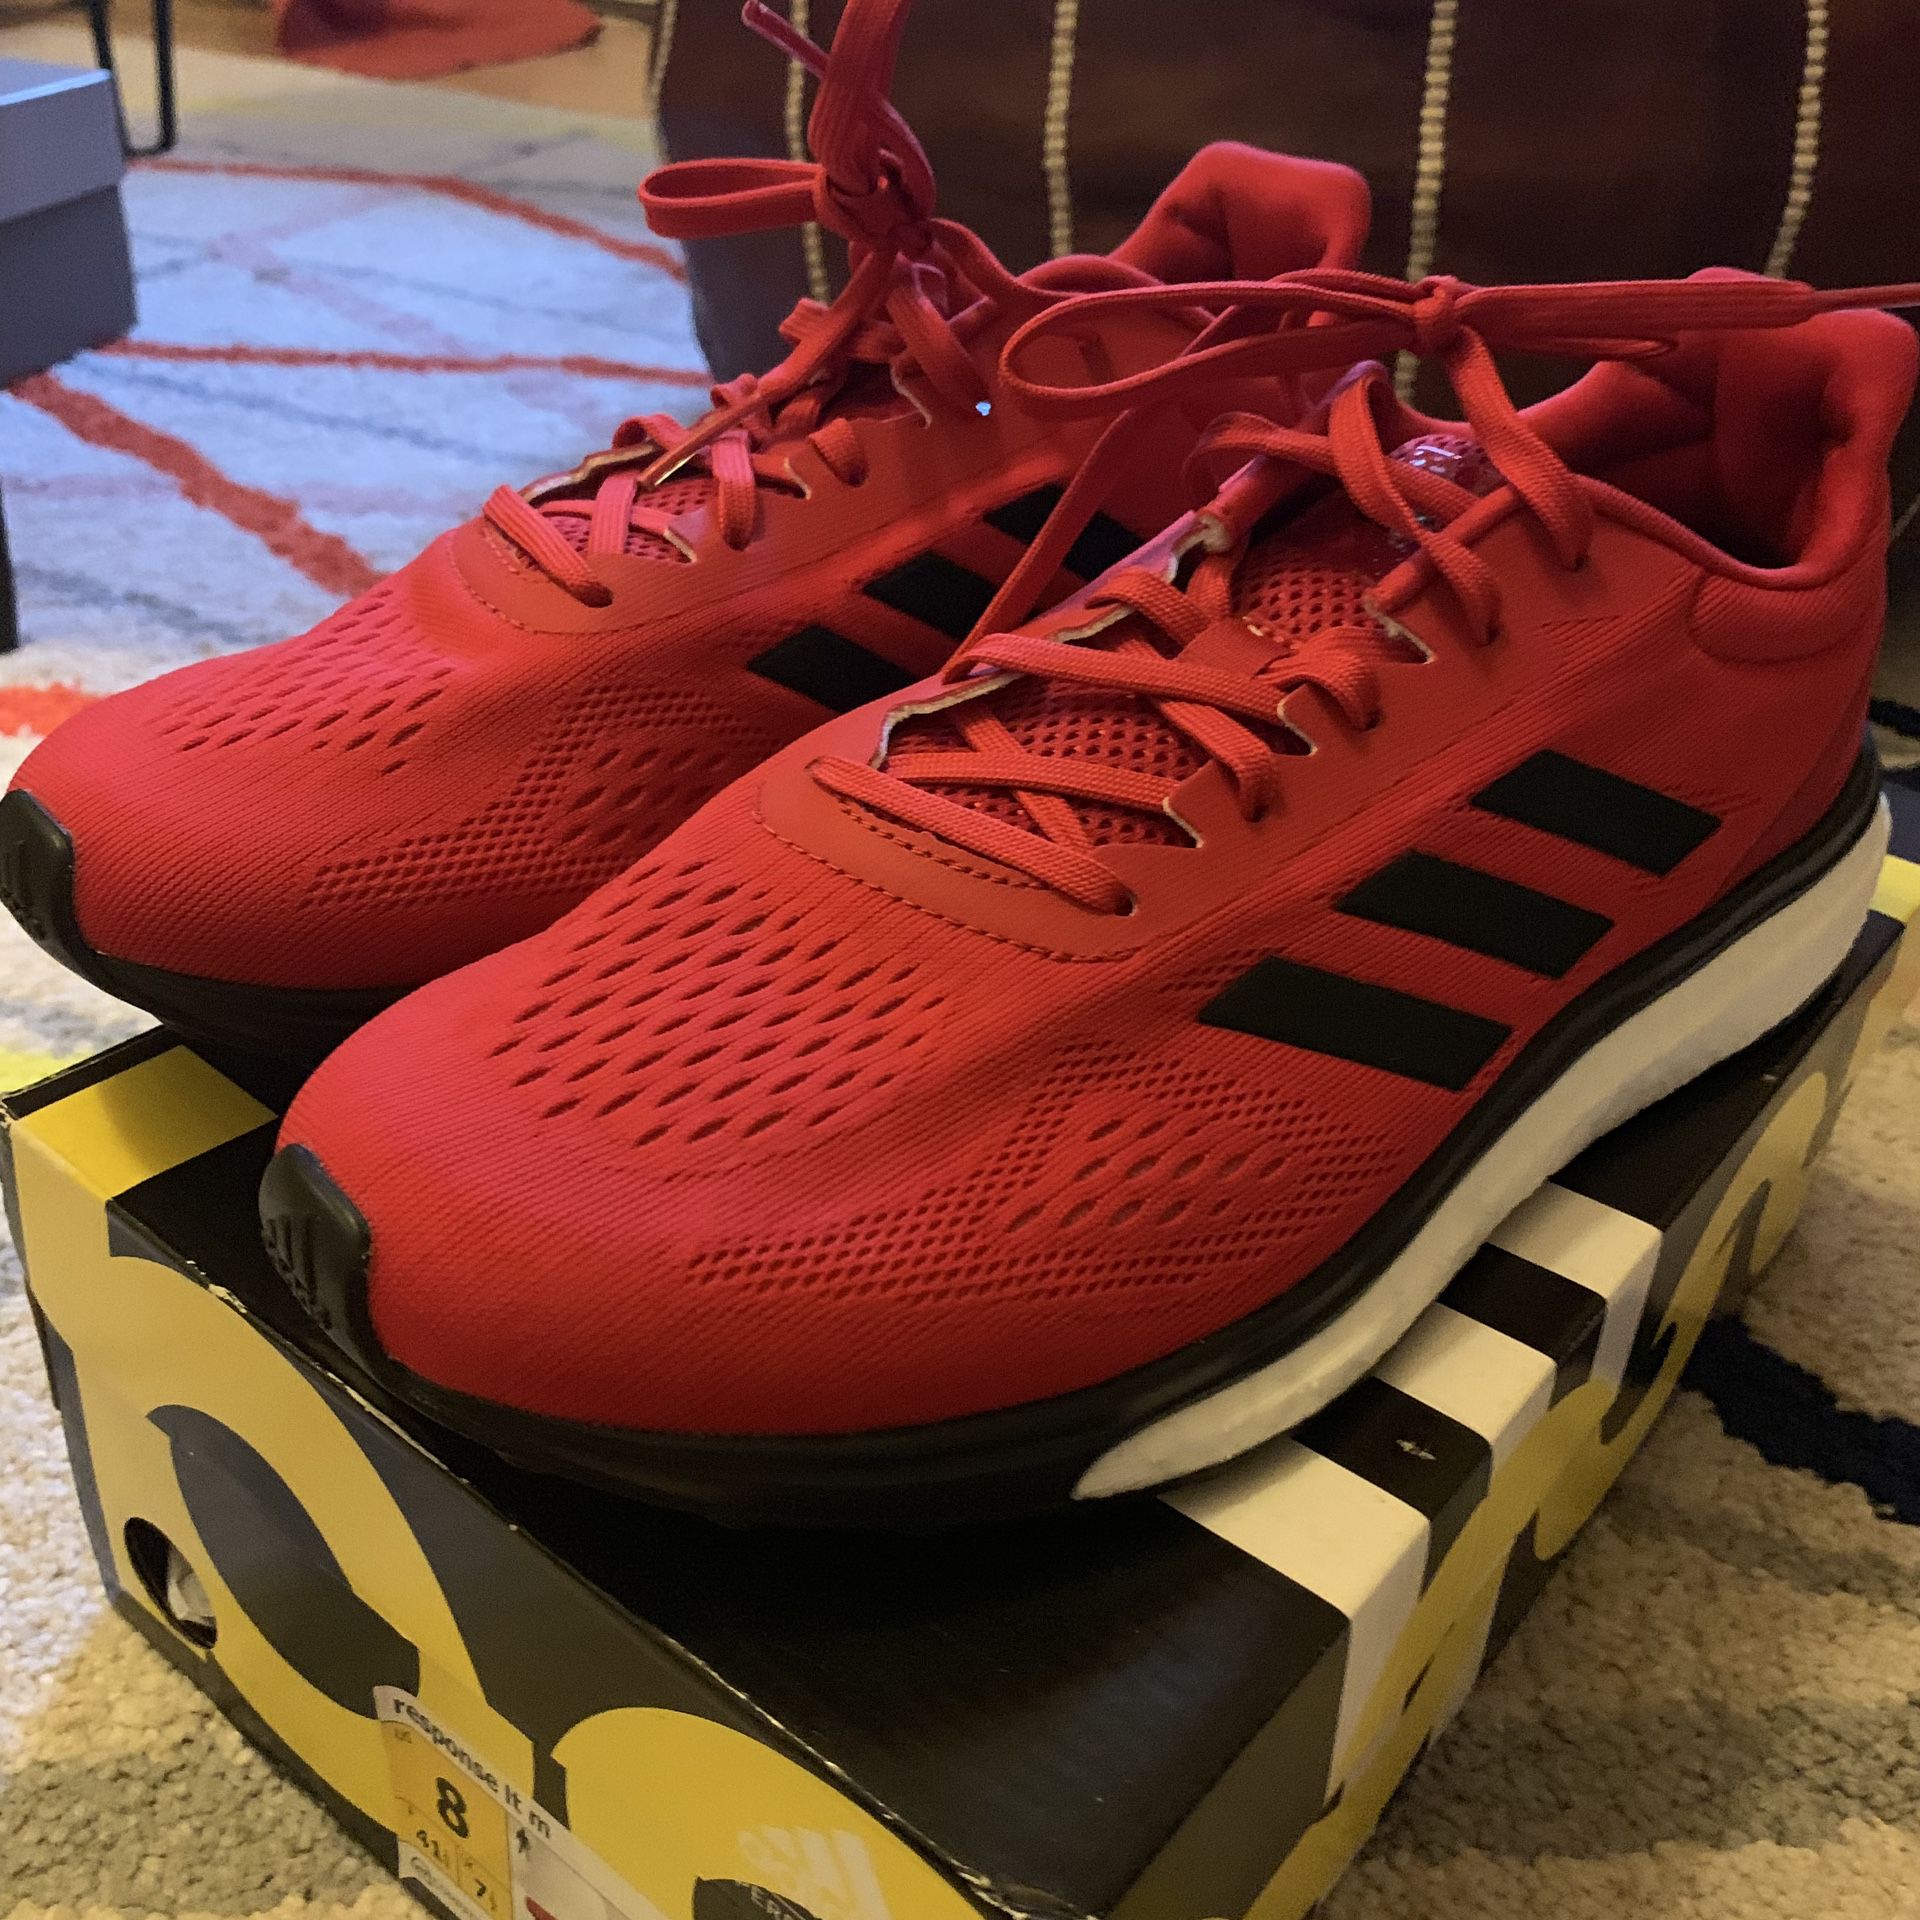 Adidas Men’s Response Ltd Running Shoes - new sz 8